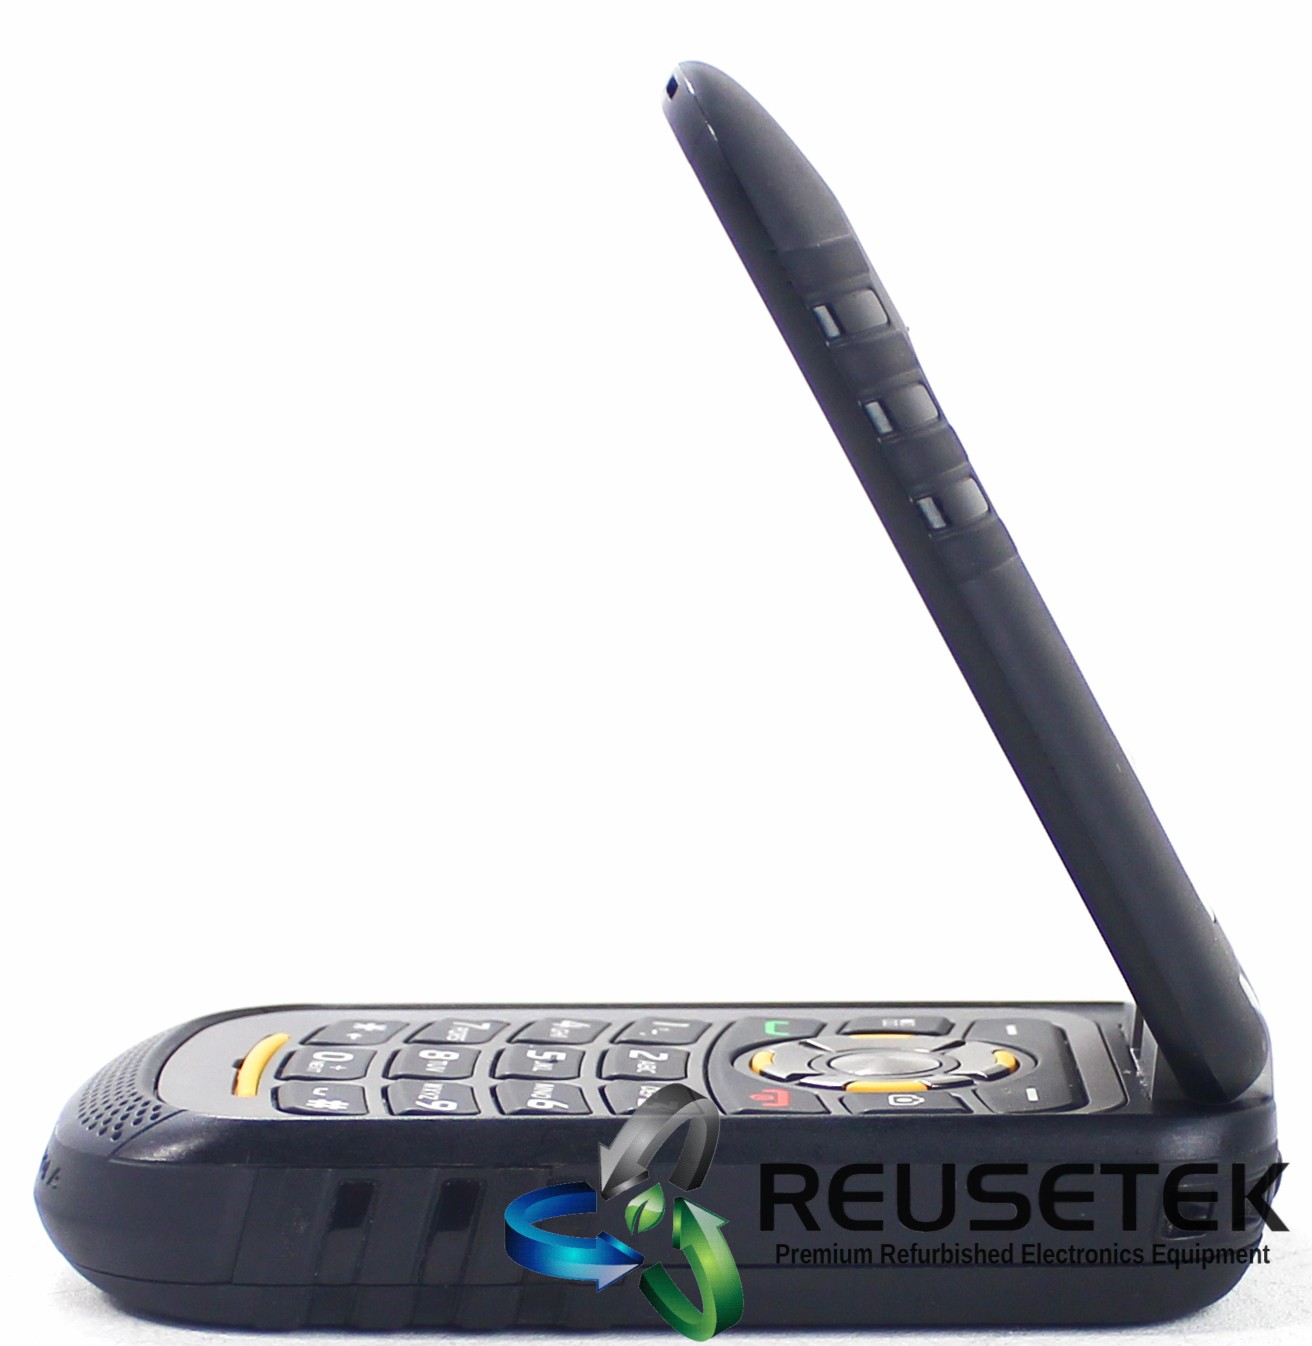 500030334-Motorola Brute i686 Sprint Black Cell Phone -image